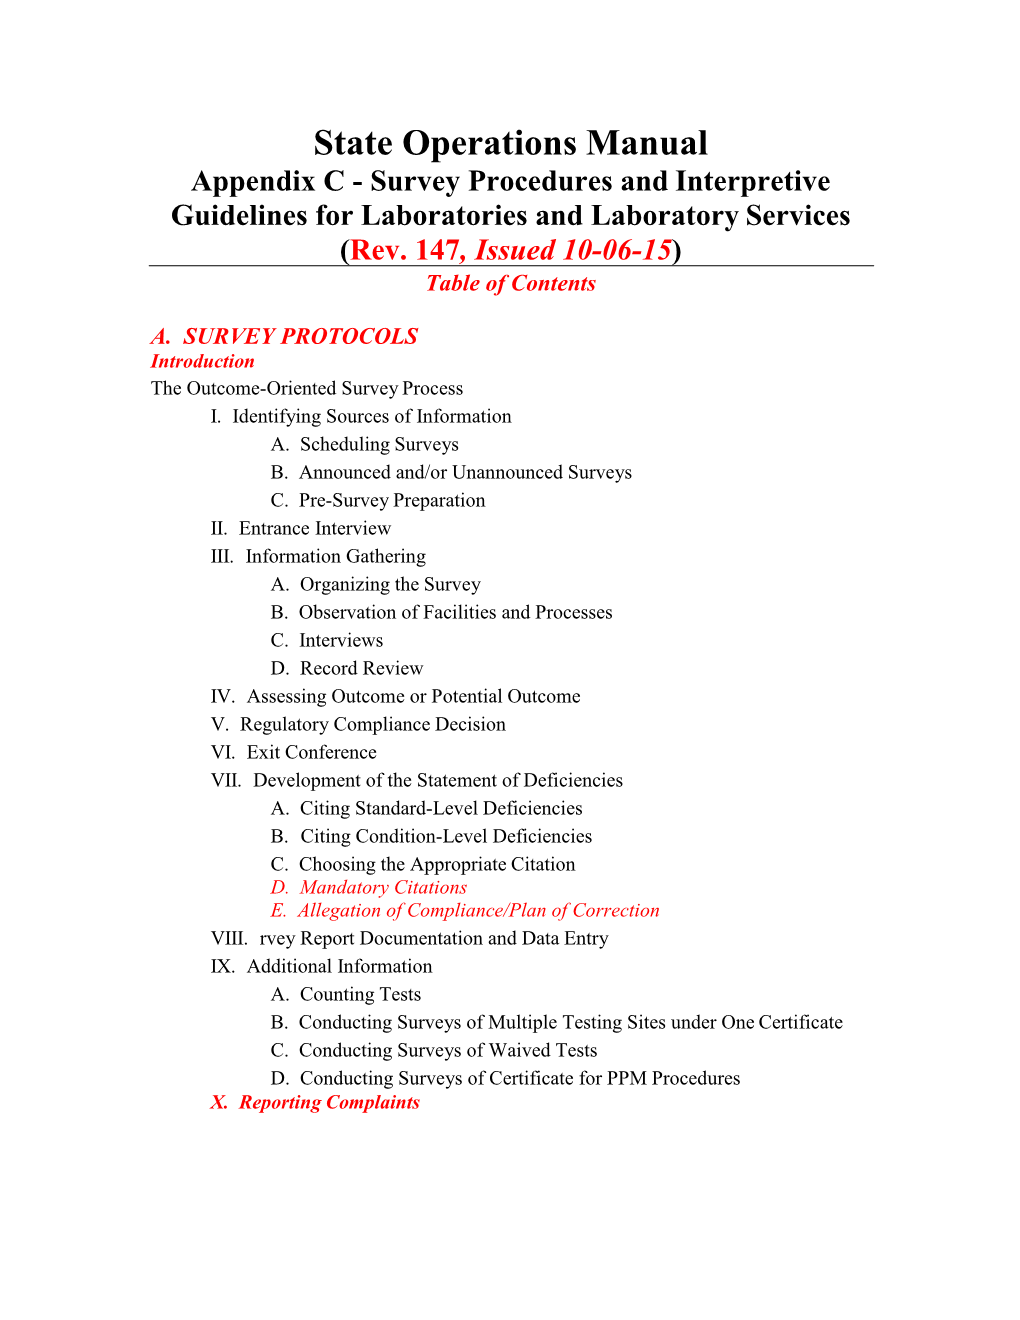 Appendix C - Survey Procedures and Interpretive Guidelines for Laboratories and Laboratory Services